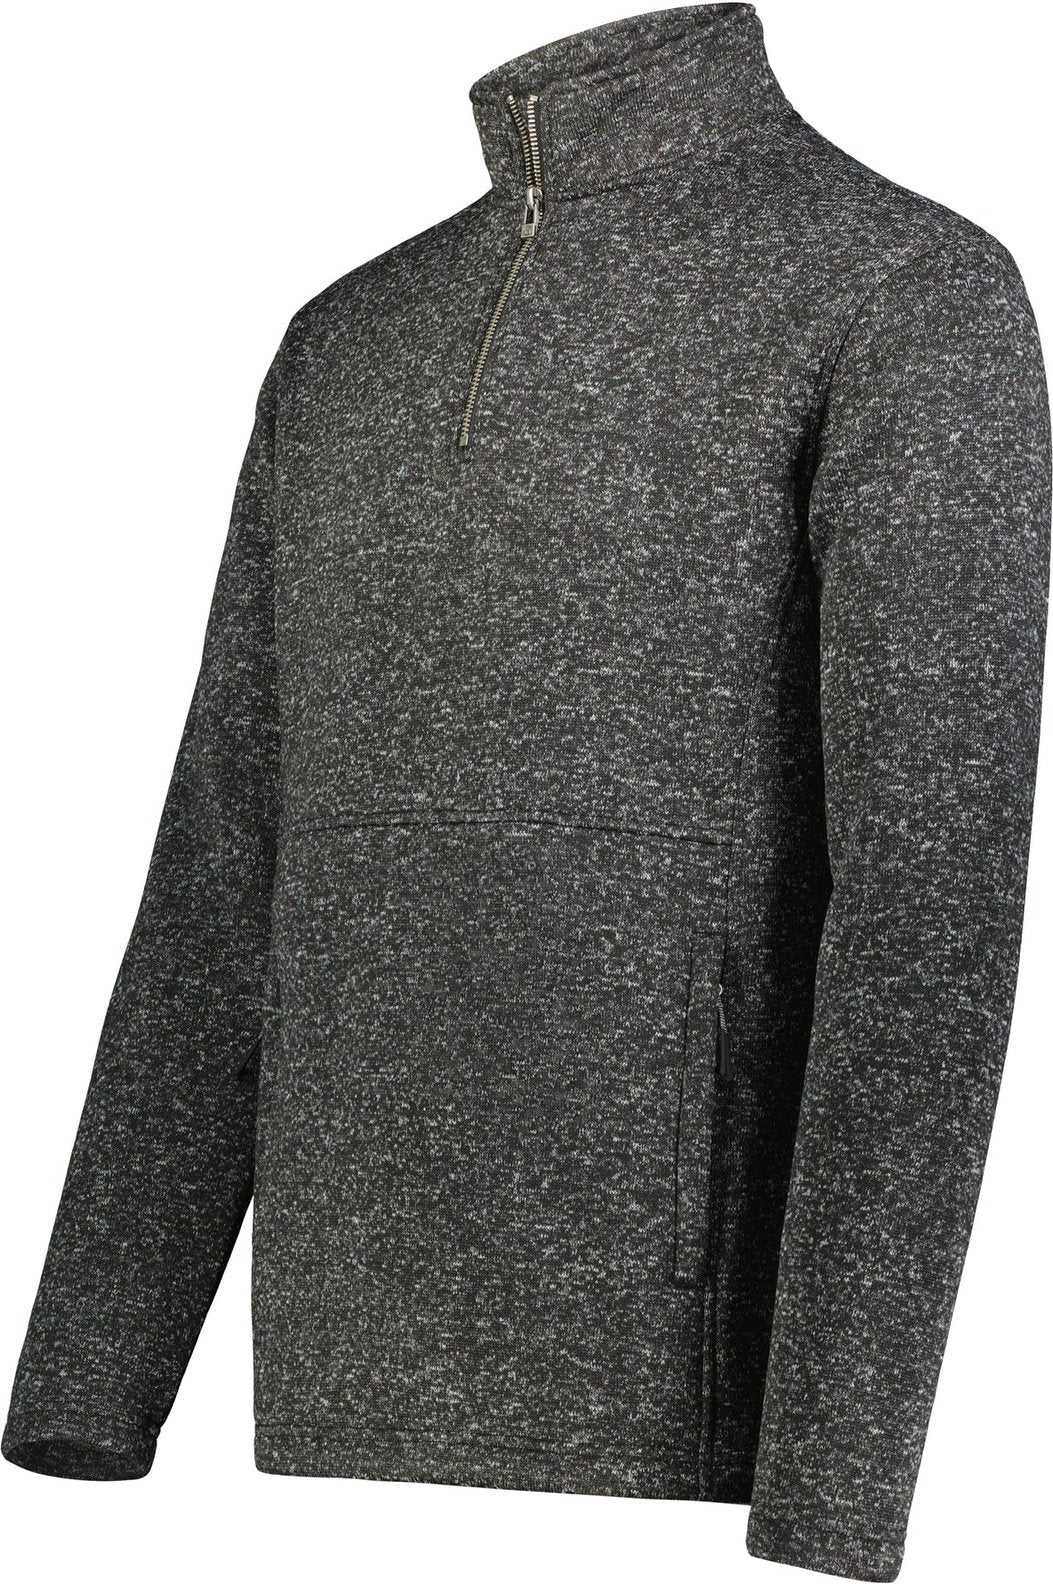 Holloway 223540 Alpine Sweater Fleece 1/4 Zip Pullover - Black Heather - HIT a Double